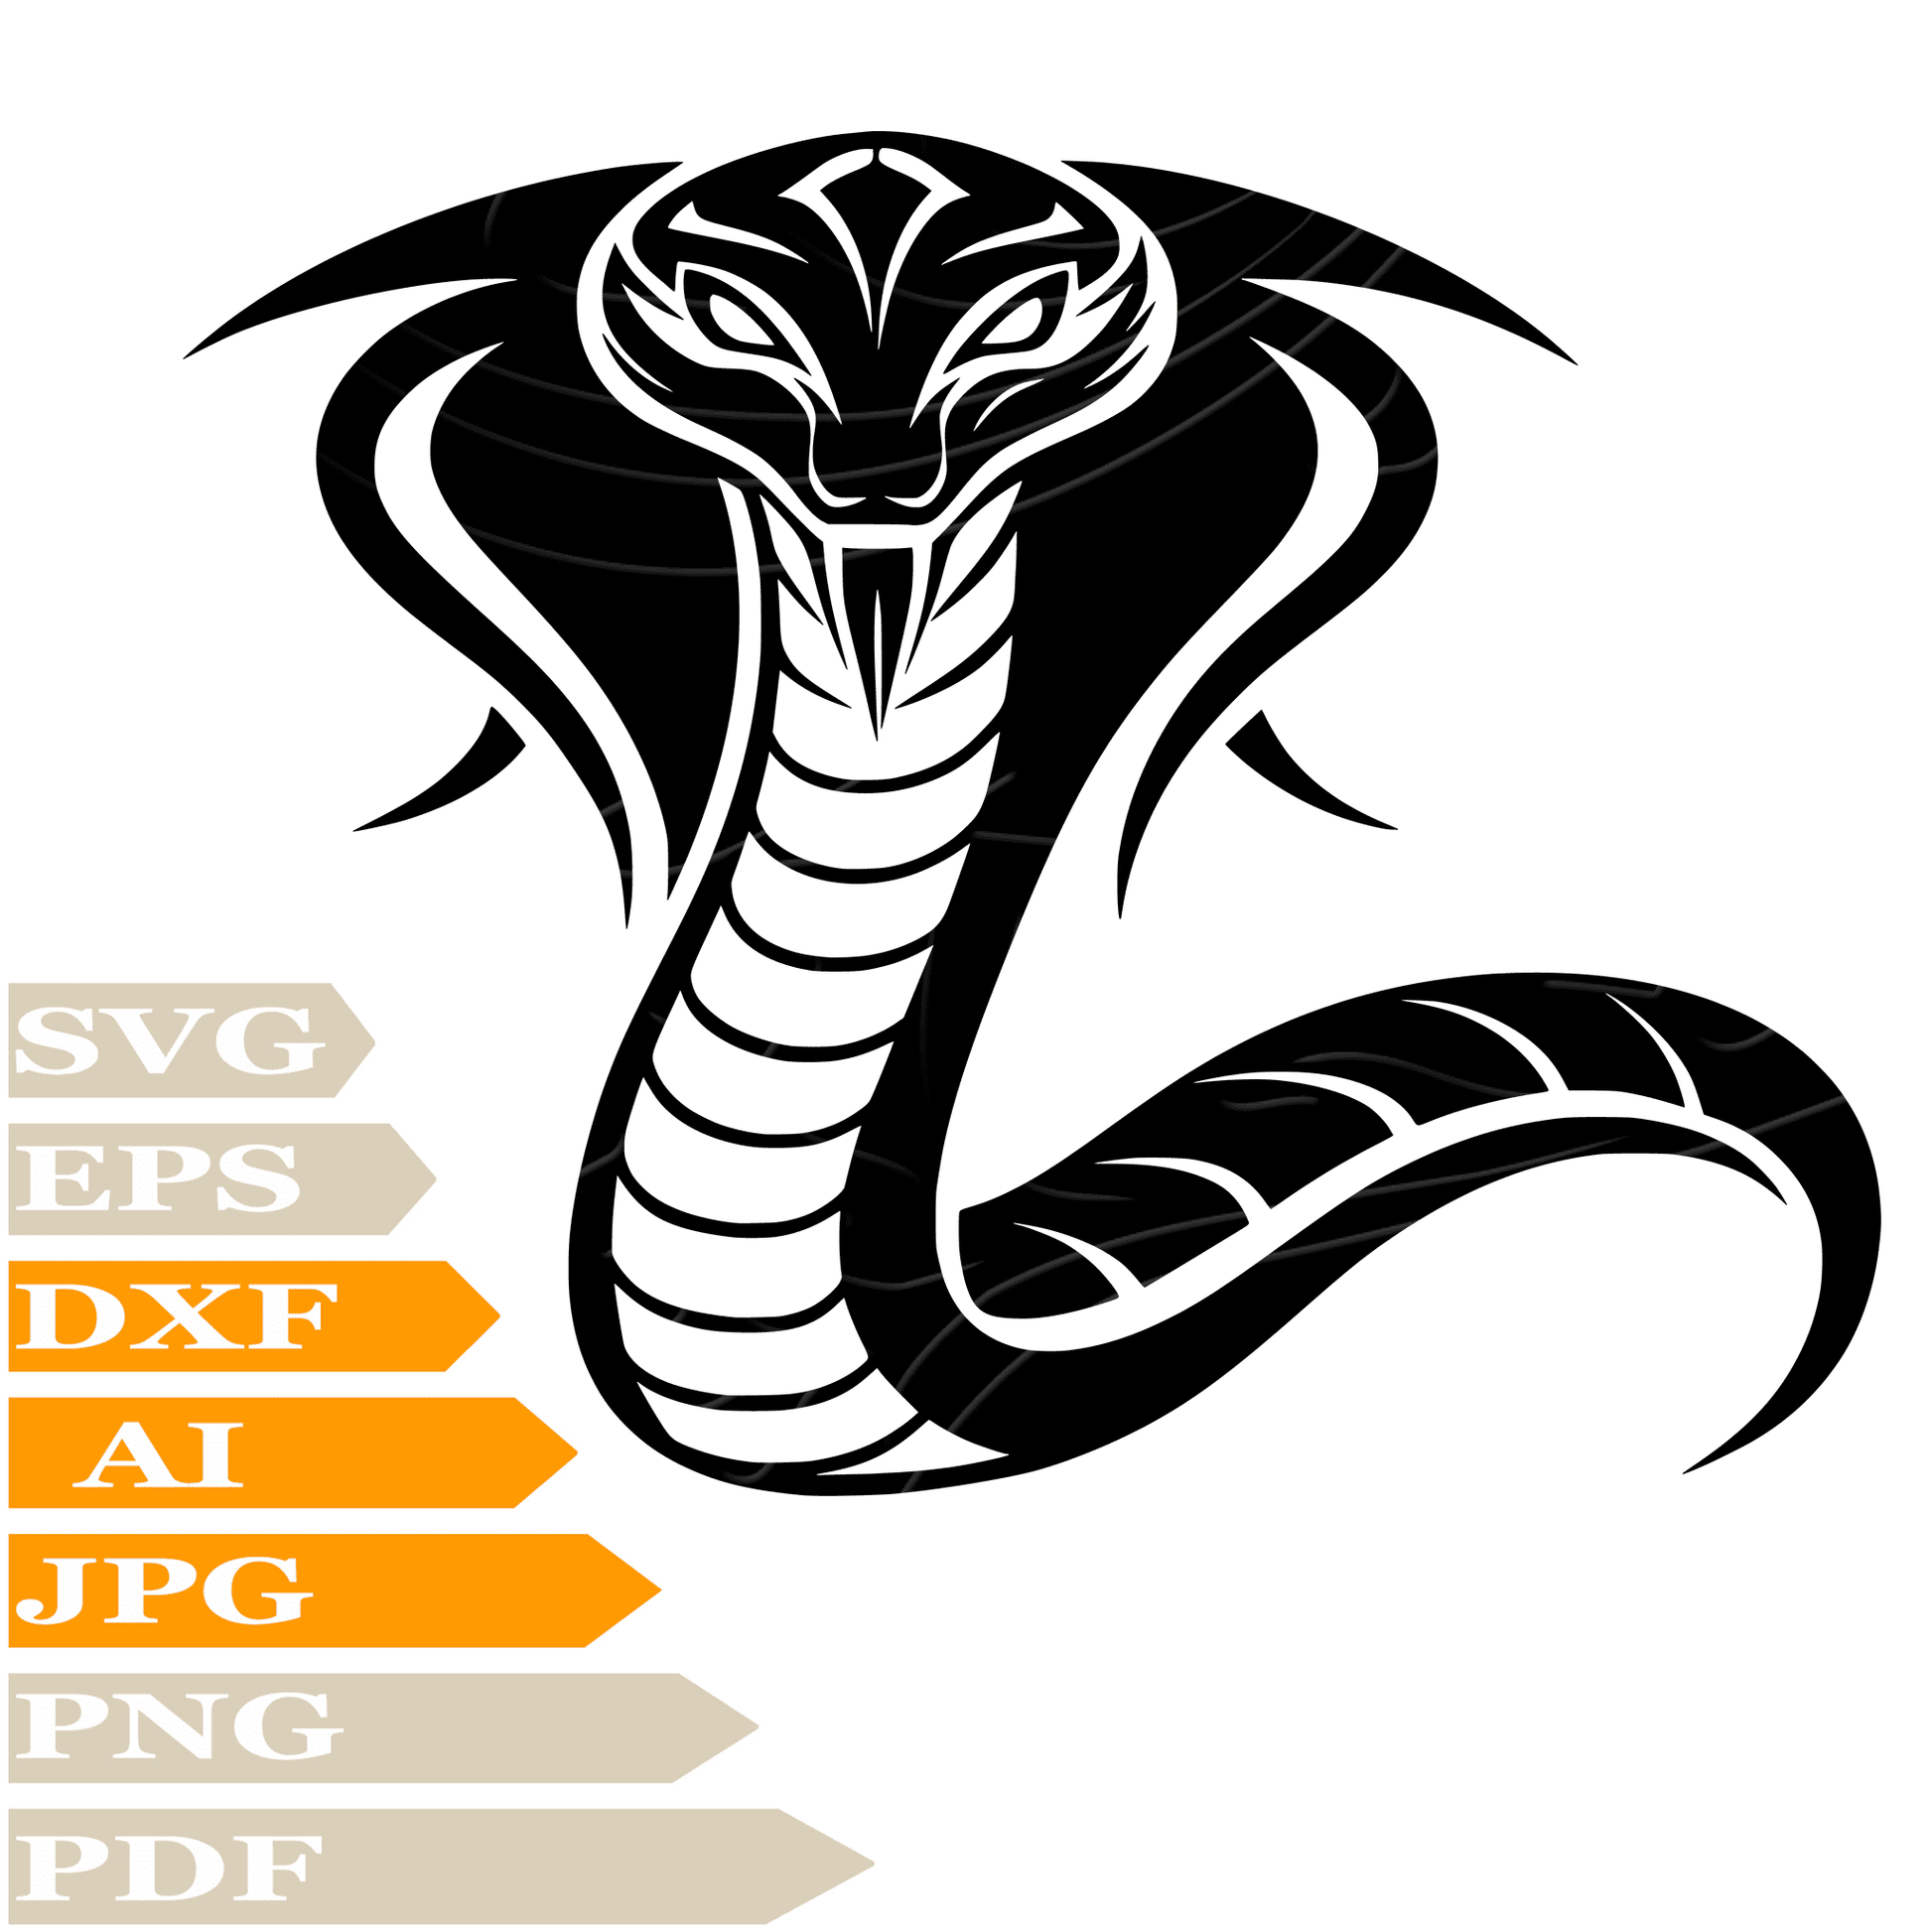 Snake SVG File, Cobra Reptile SVG Design, Cobra Snake SVG Cricut, Cobra Digital Vector, PNG, Image Cut, Clipart, Cut File, Print, Decal, Shirt, Silhouette